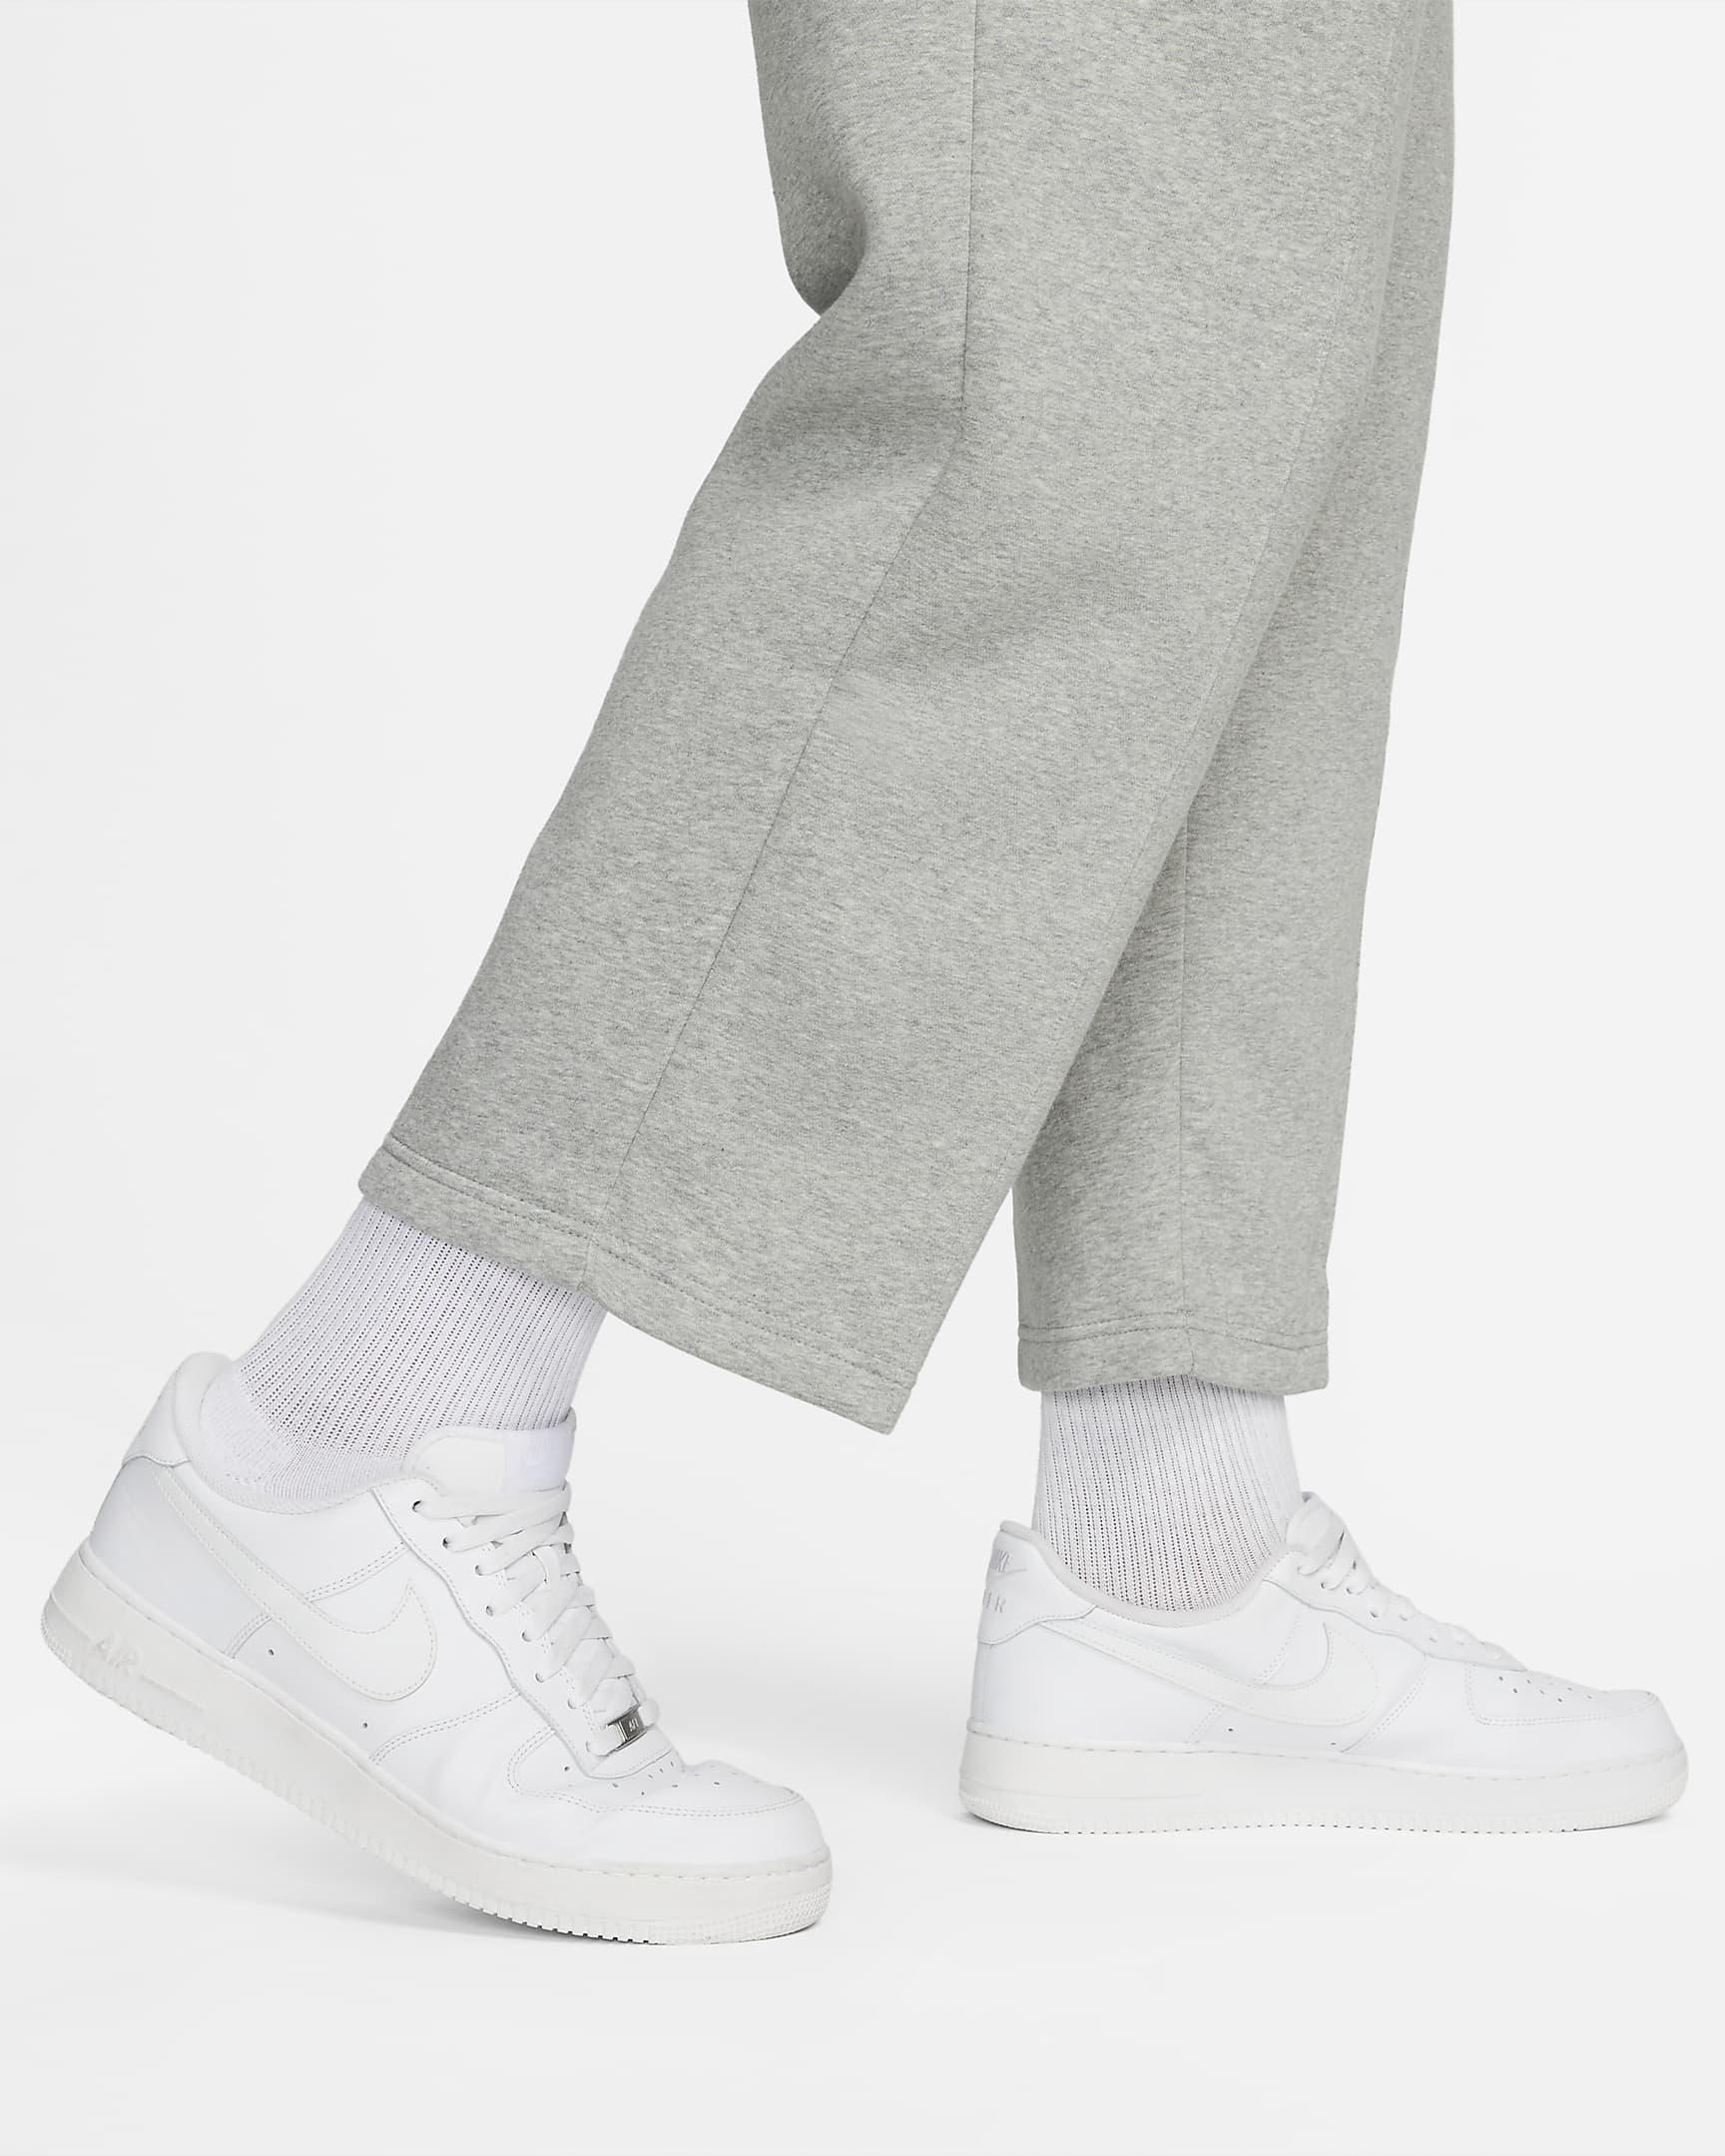 Nike Club Fleece Men's Cropped Trousers. Nike ZA